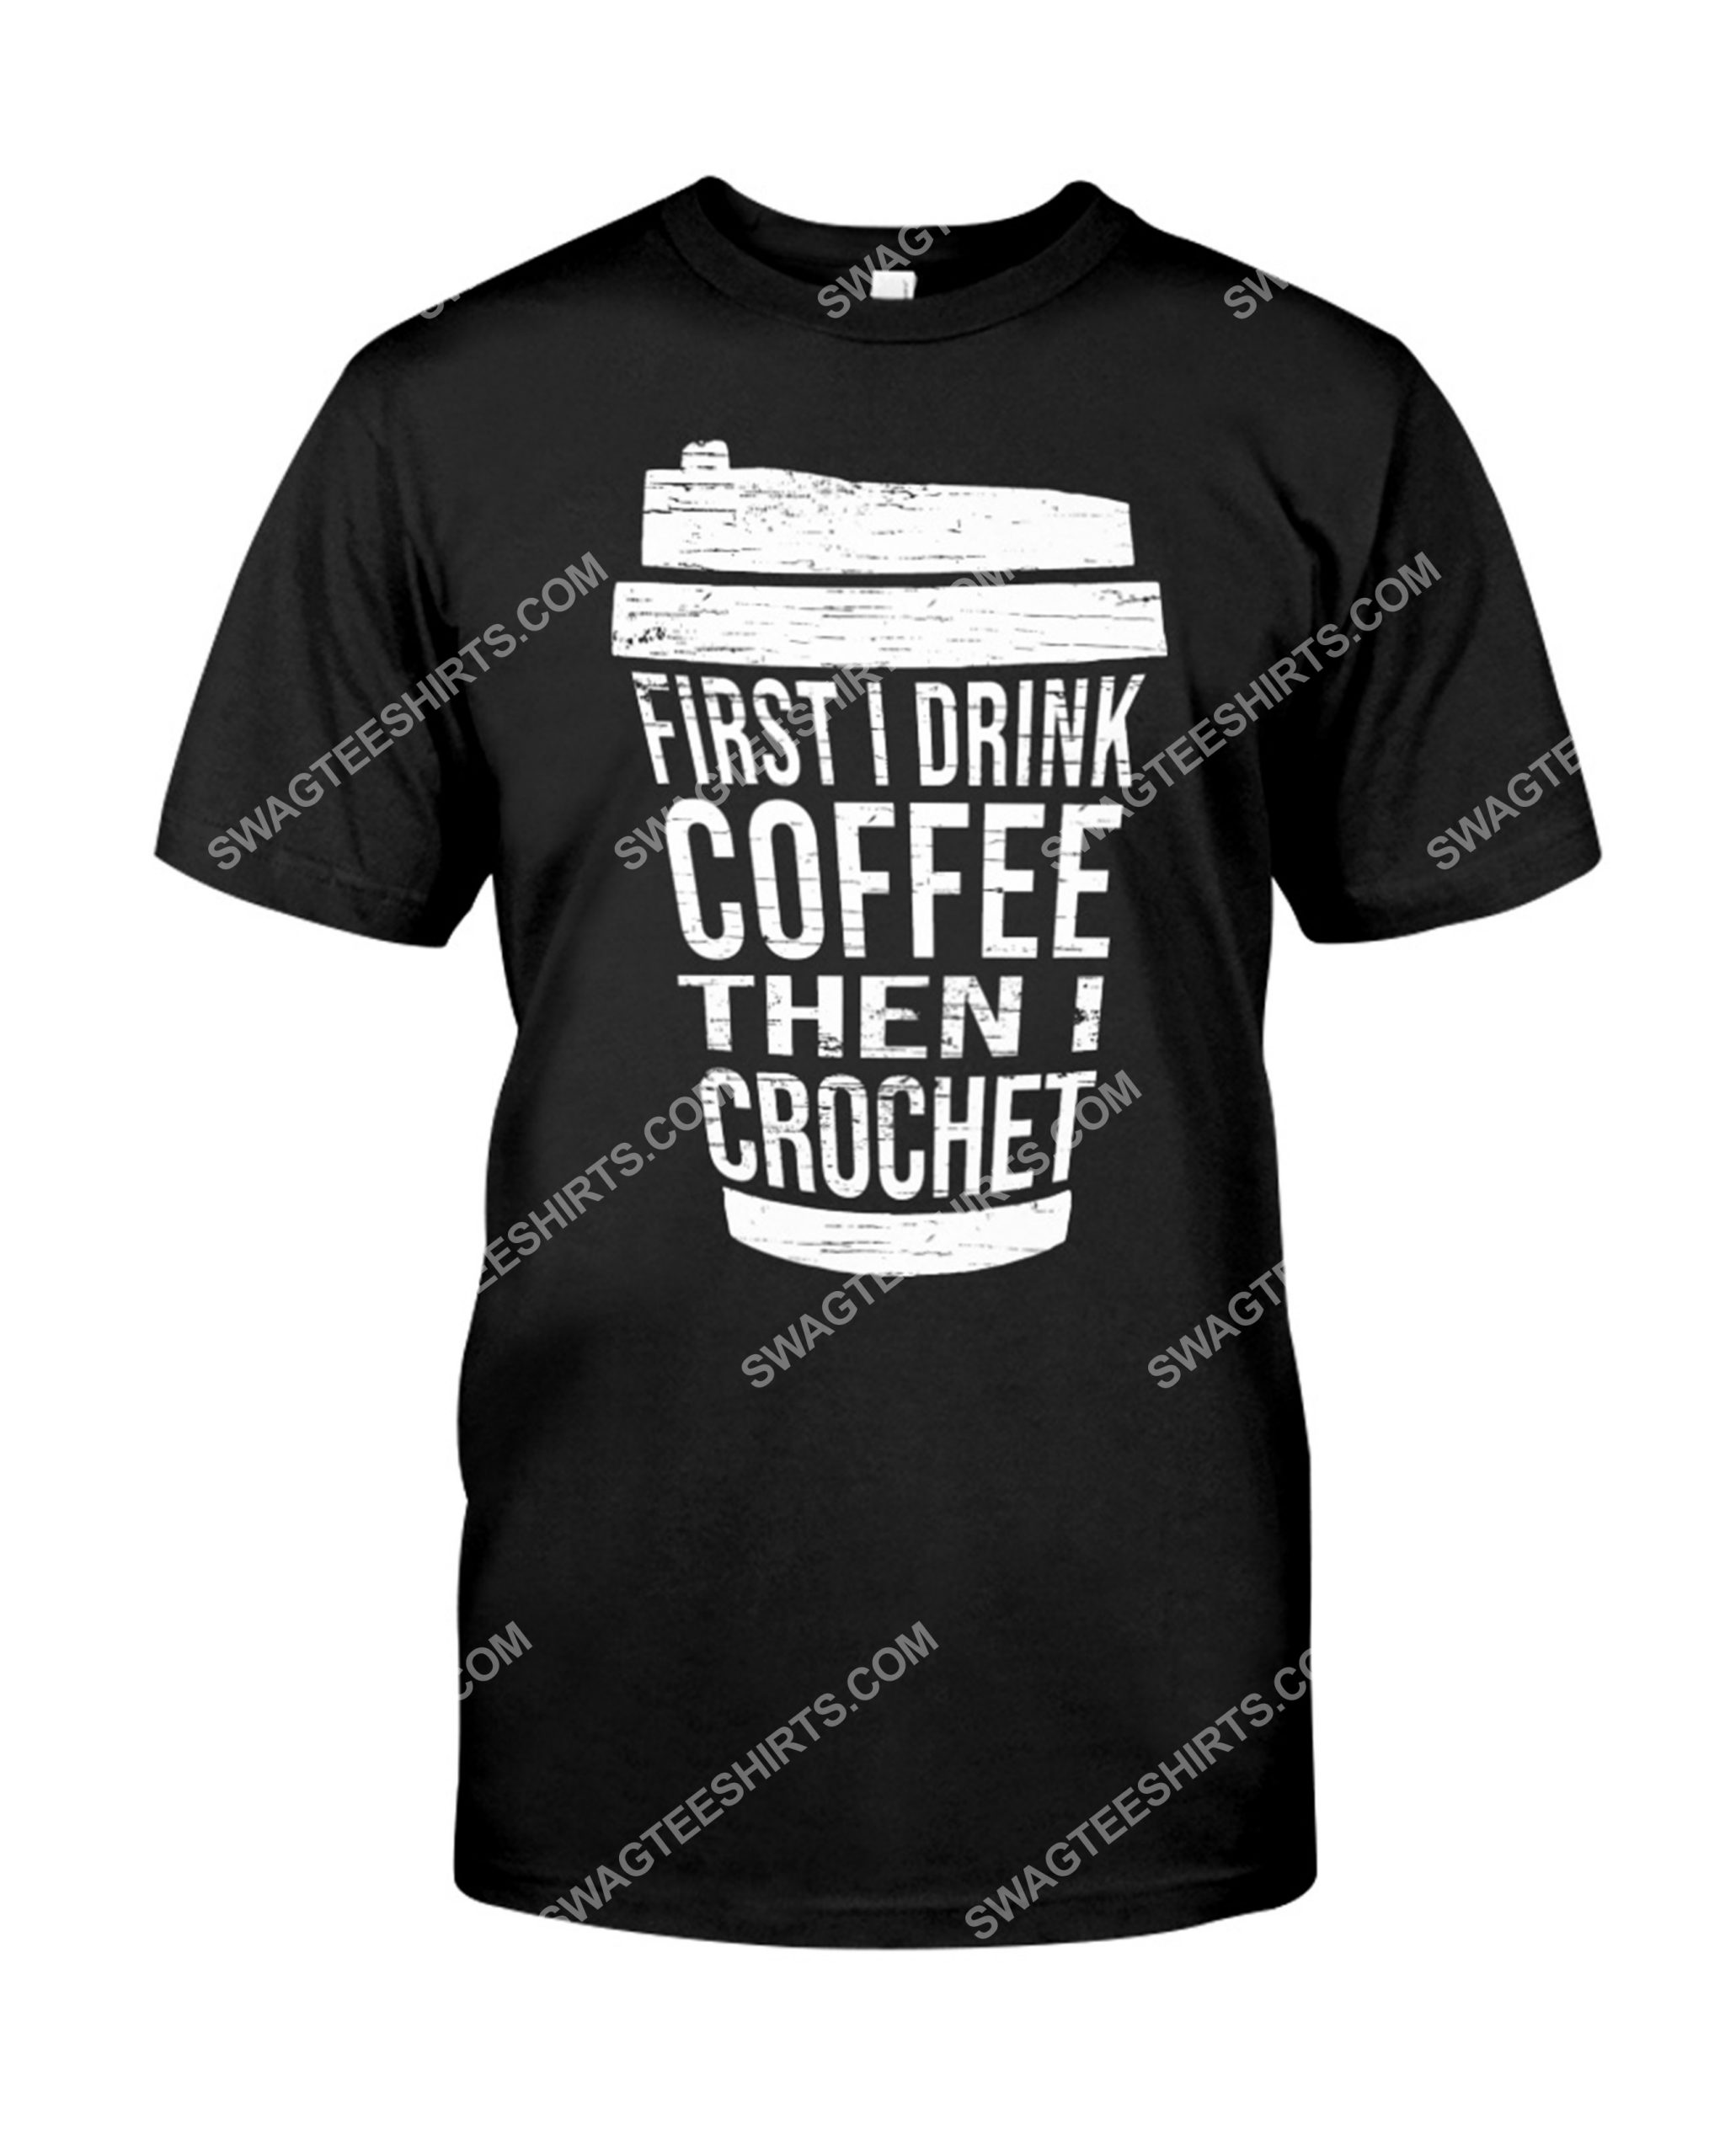 first i drink coffee then i crochet shirt 1(1)